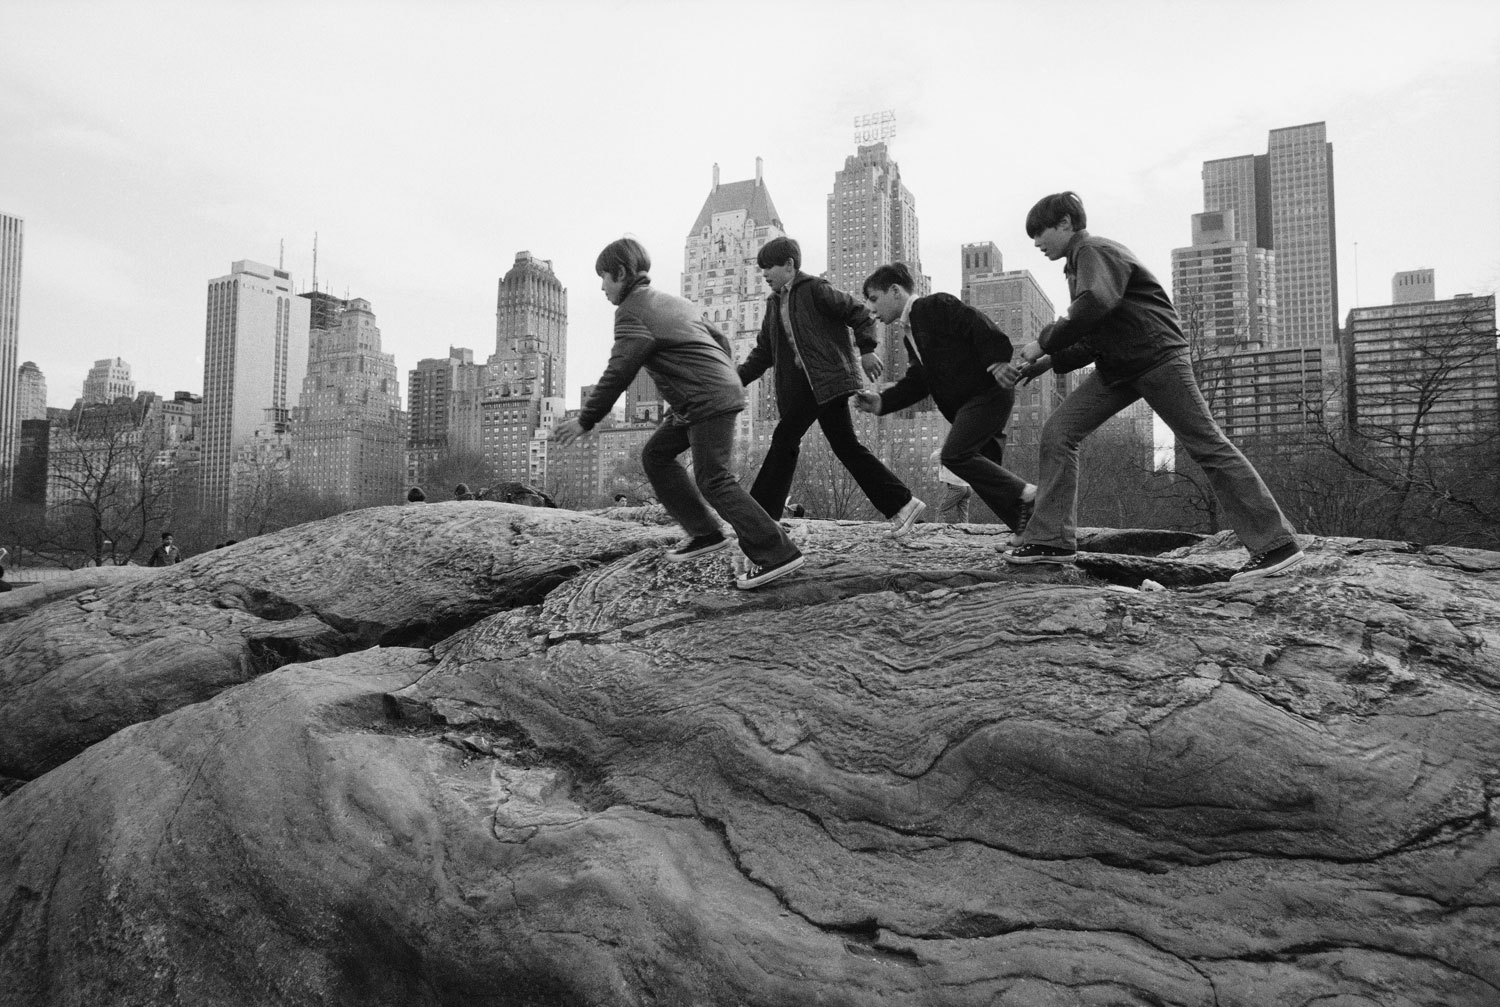 Boys climb on rocks in Central Park, November 1972.